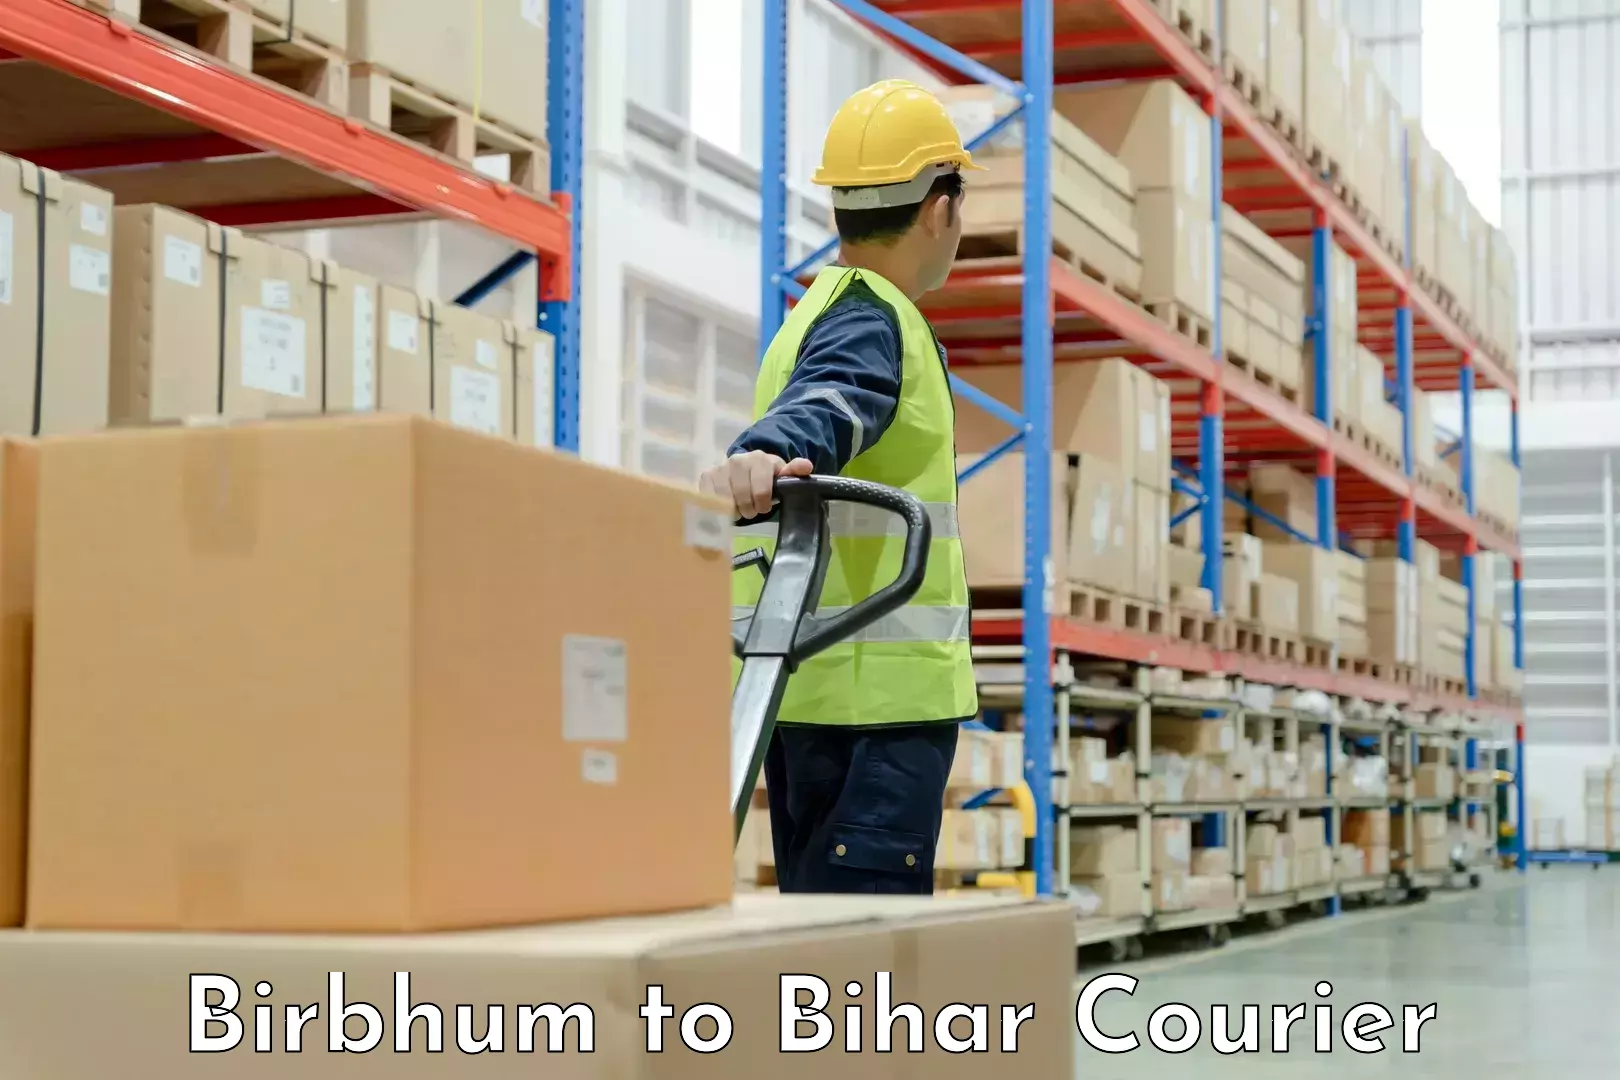 Furniture relocation experts Birbhum to Bihar